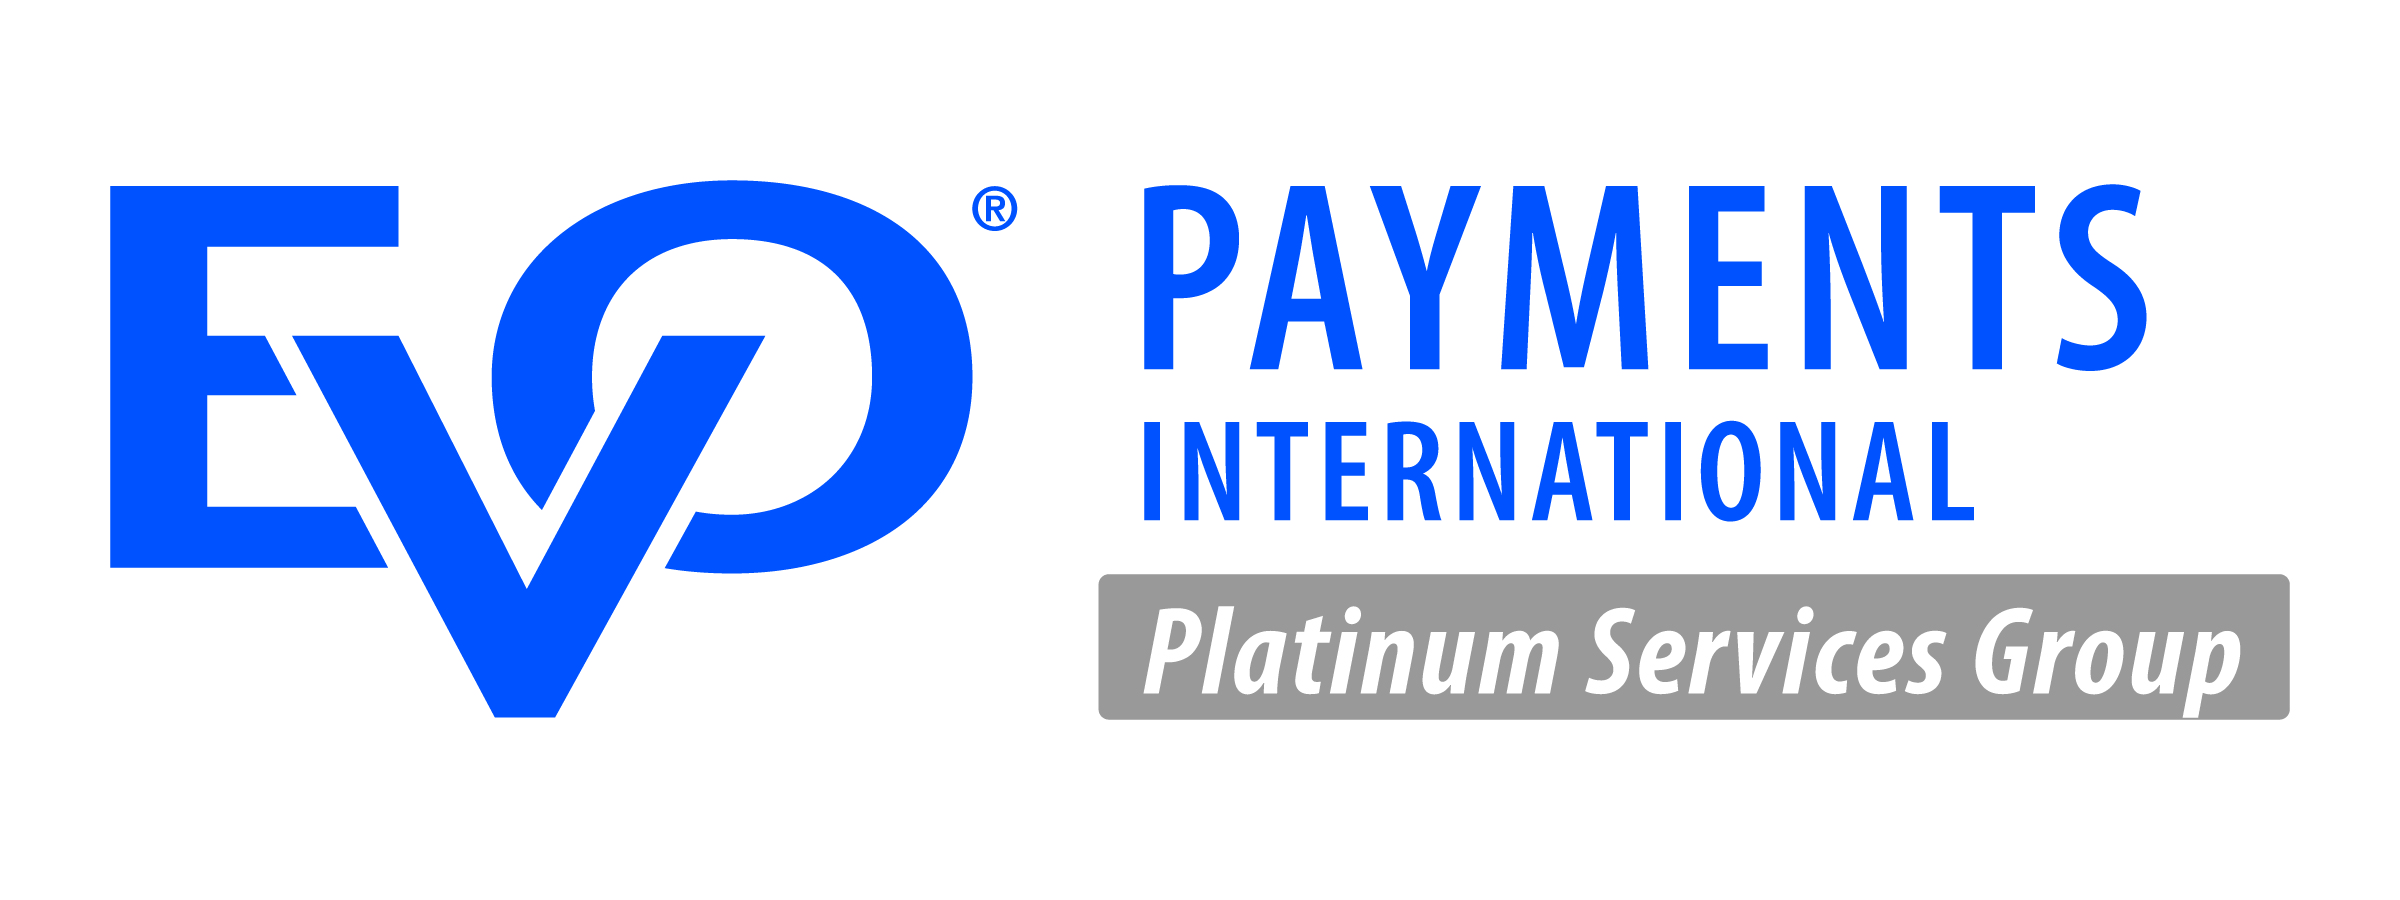 Evo Payments International